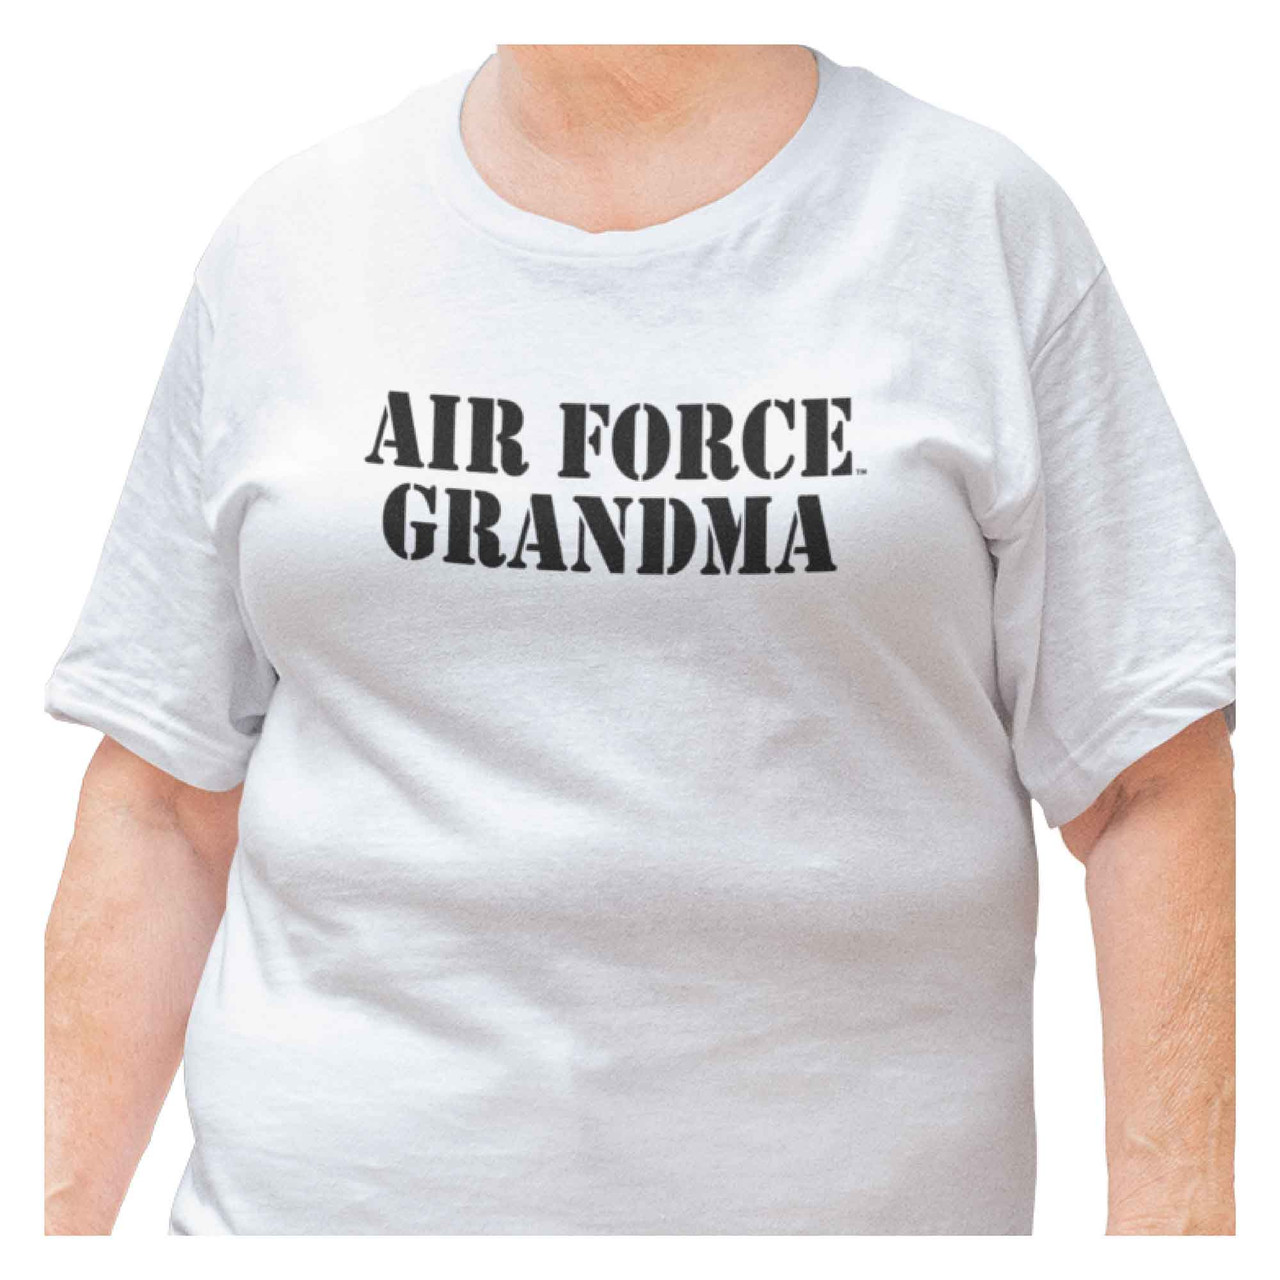 air force grandma ladies performance vela shirt - front view